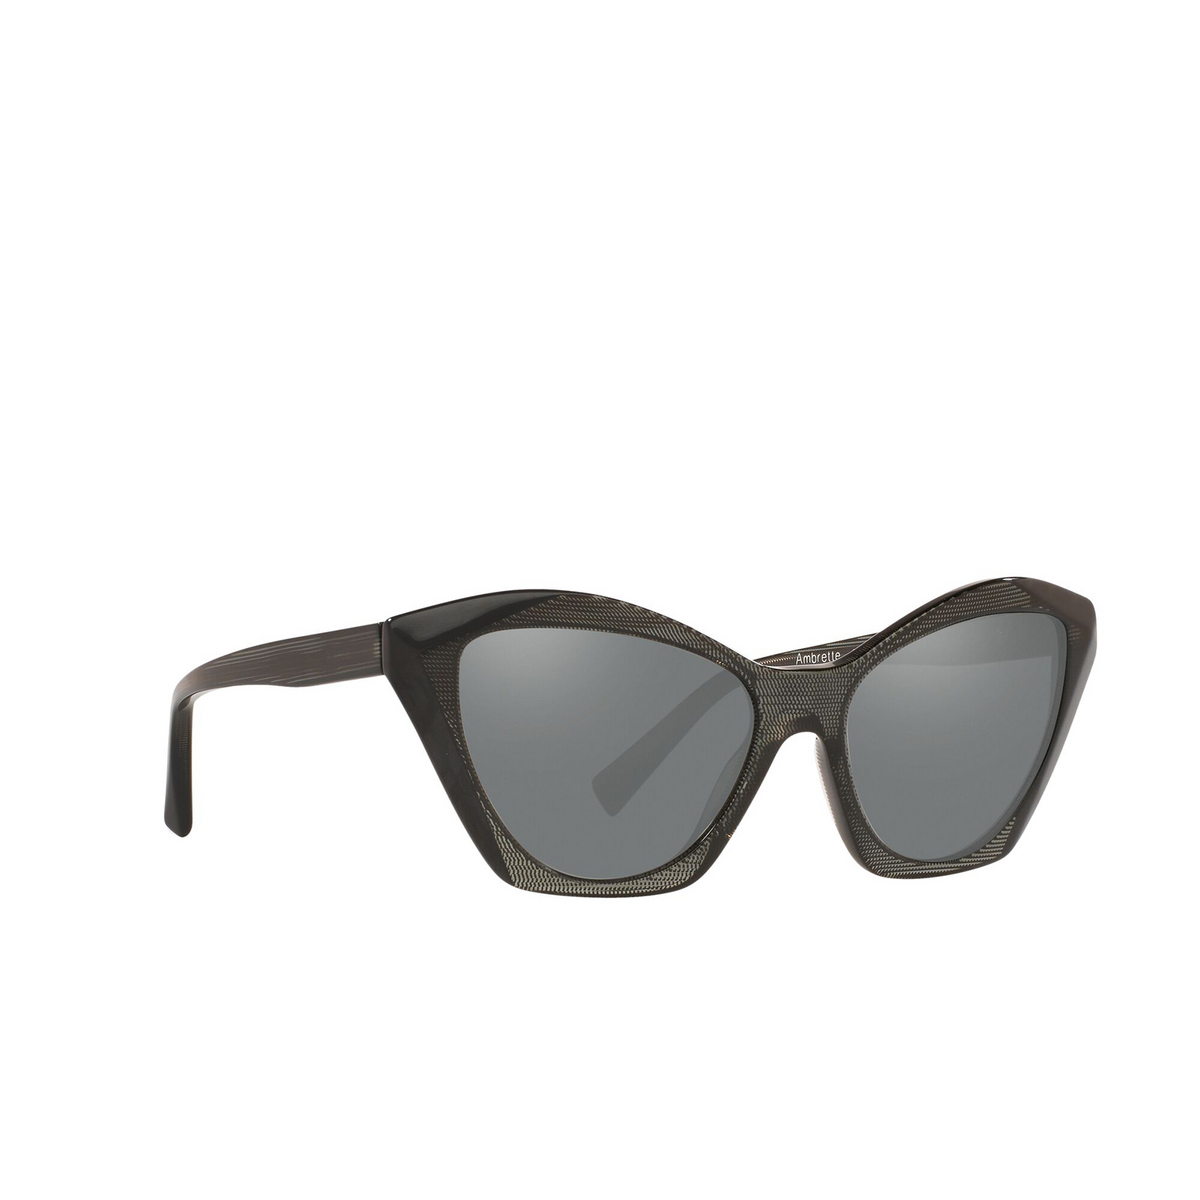 Alain Mikli® Irregular Sunglasses: Ambrette A05056 color Pointille Black / Noir Mikli 001/6G - three-quarters view.